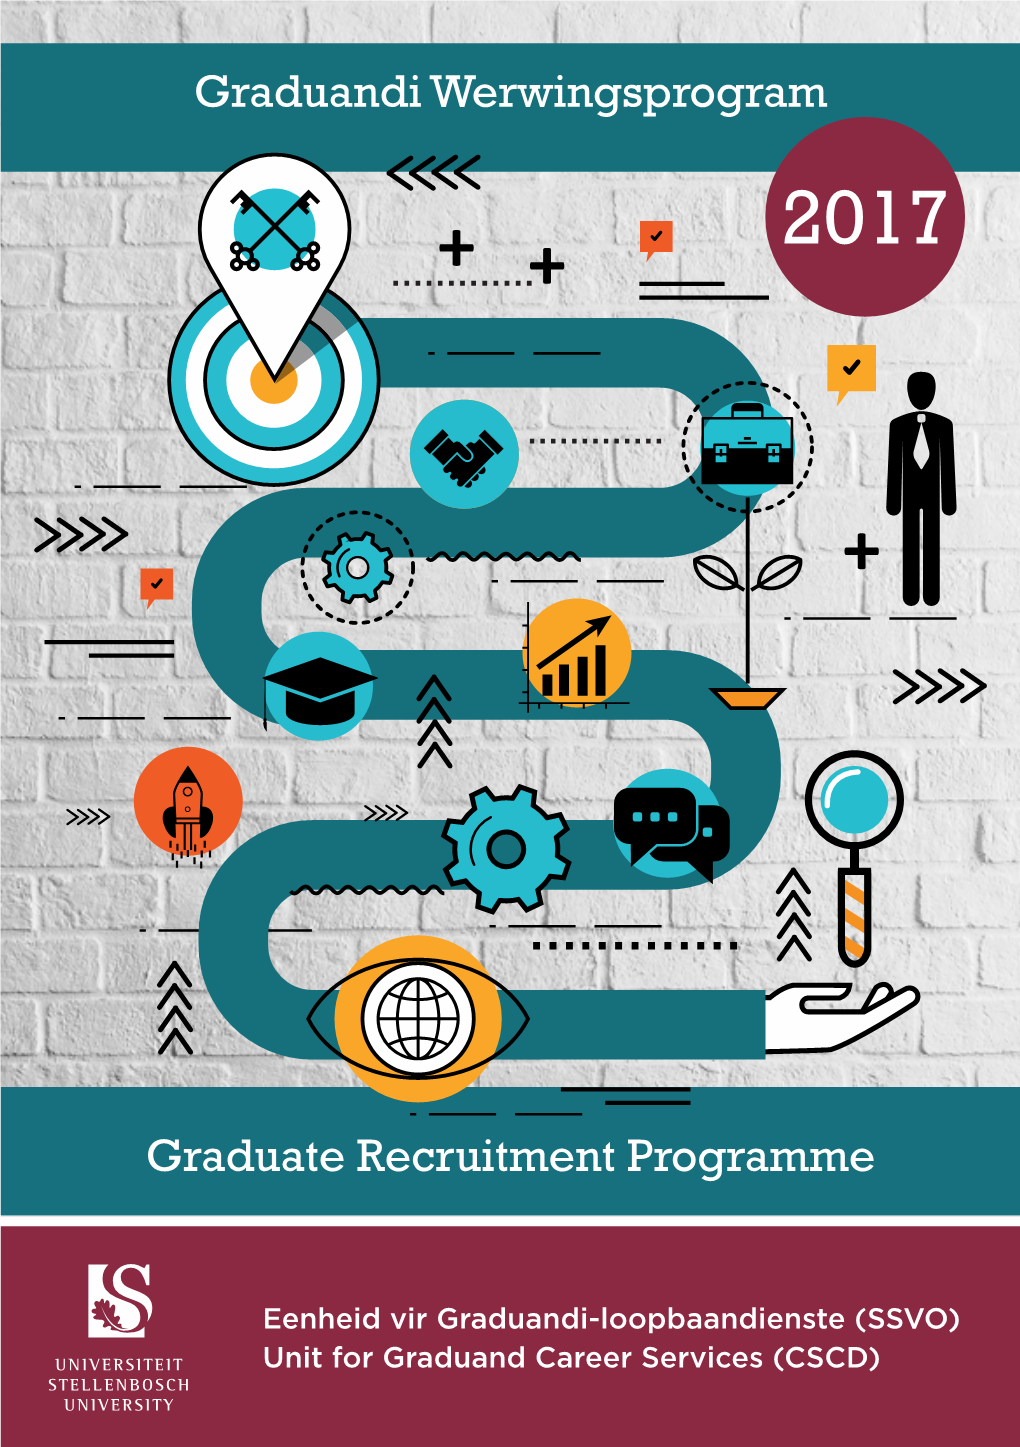 Graduate Recruitment Programme Graduandi Werwingsprogram